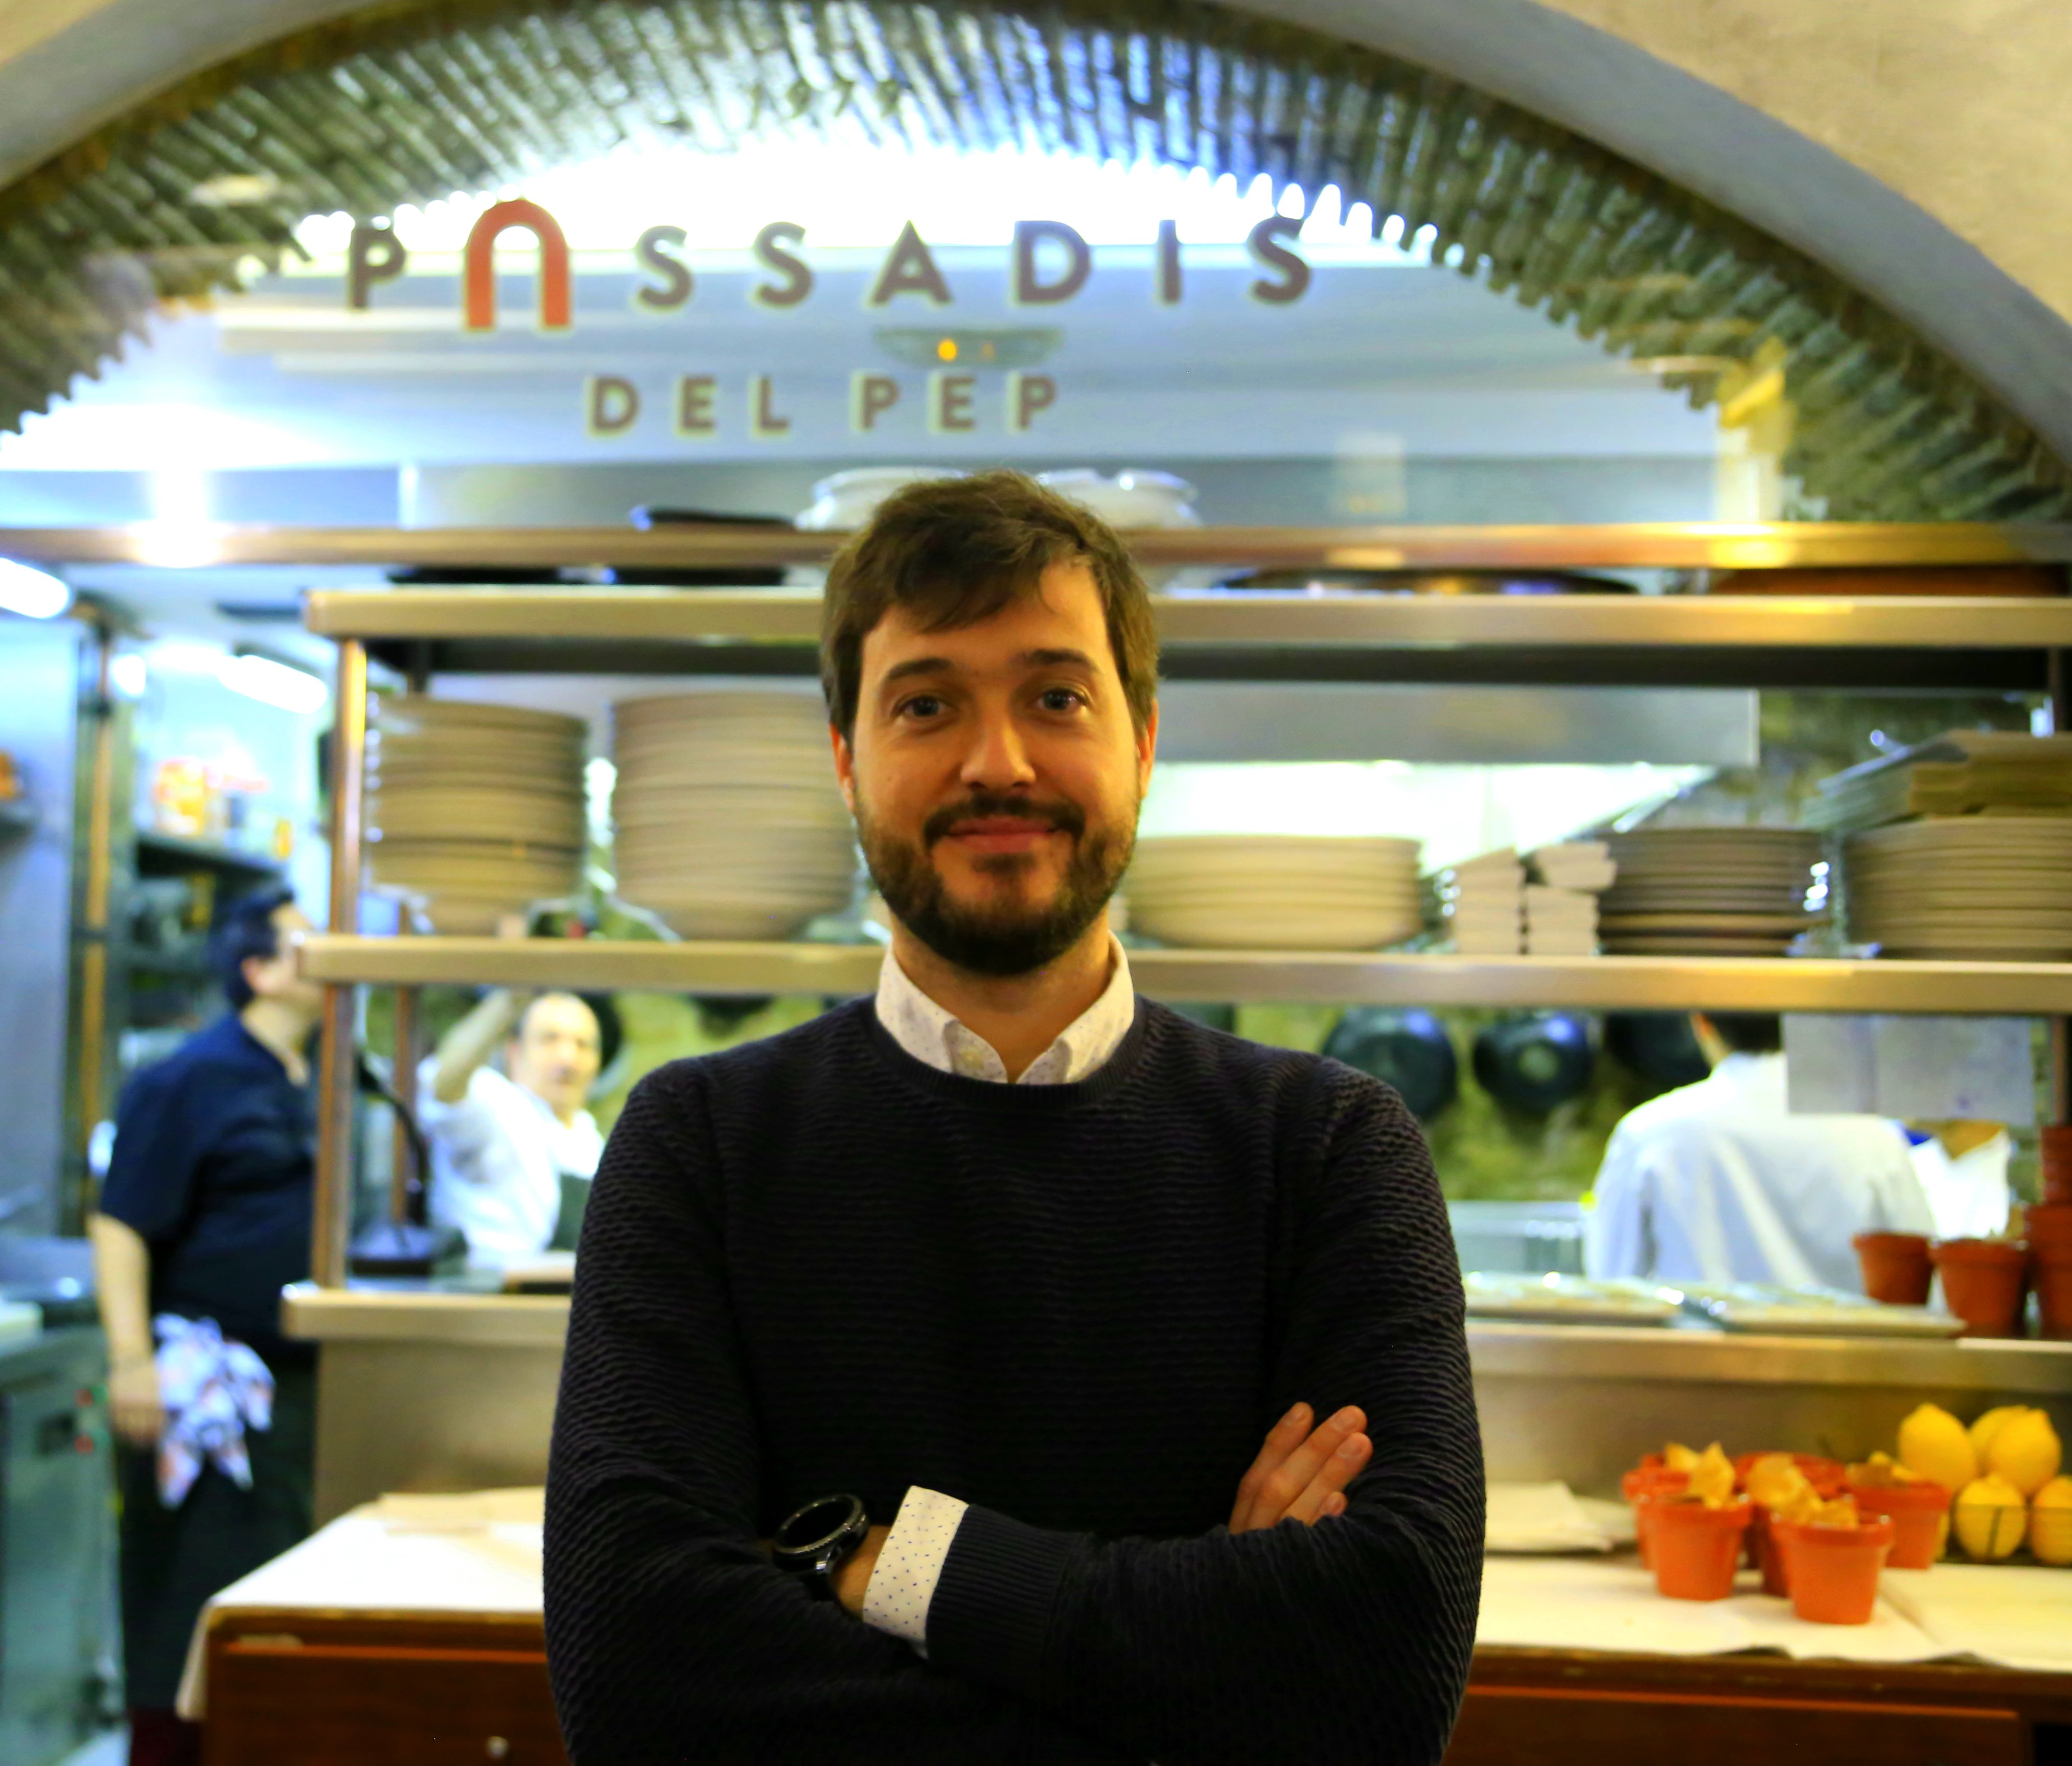 40 años del Passadís del Pep, el restaurante favorito de Coppola, Serrat o Tàpies